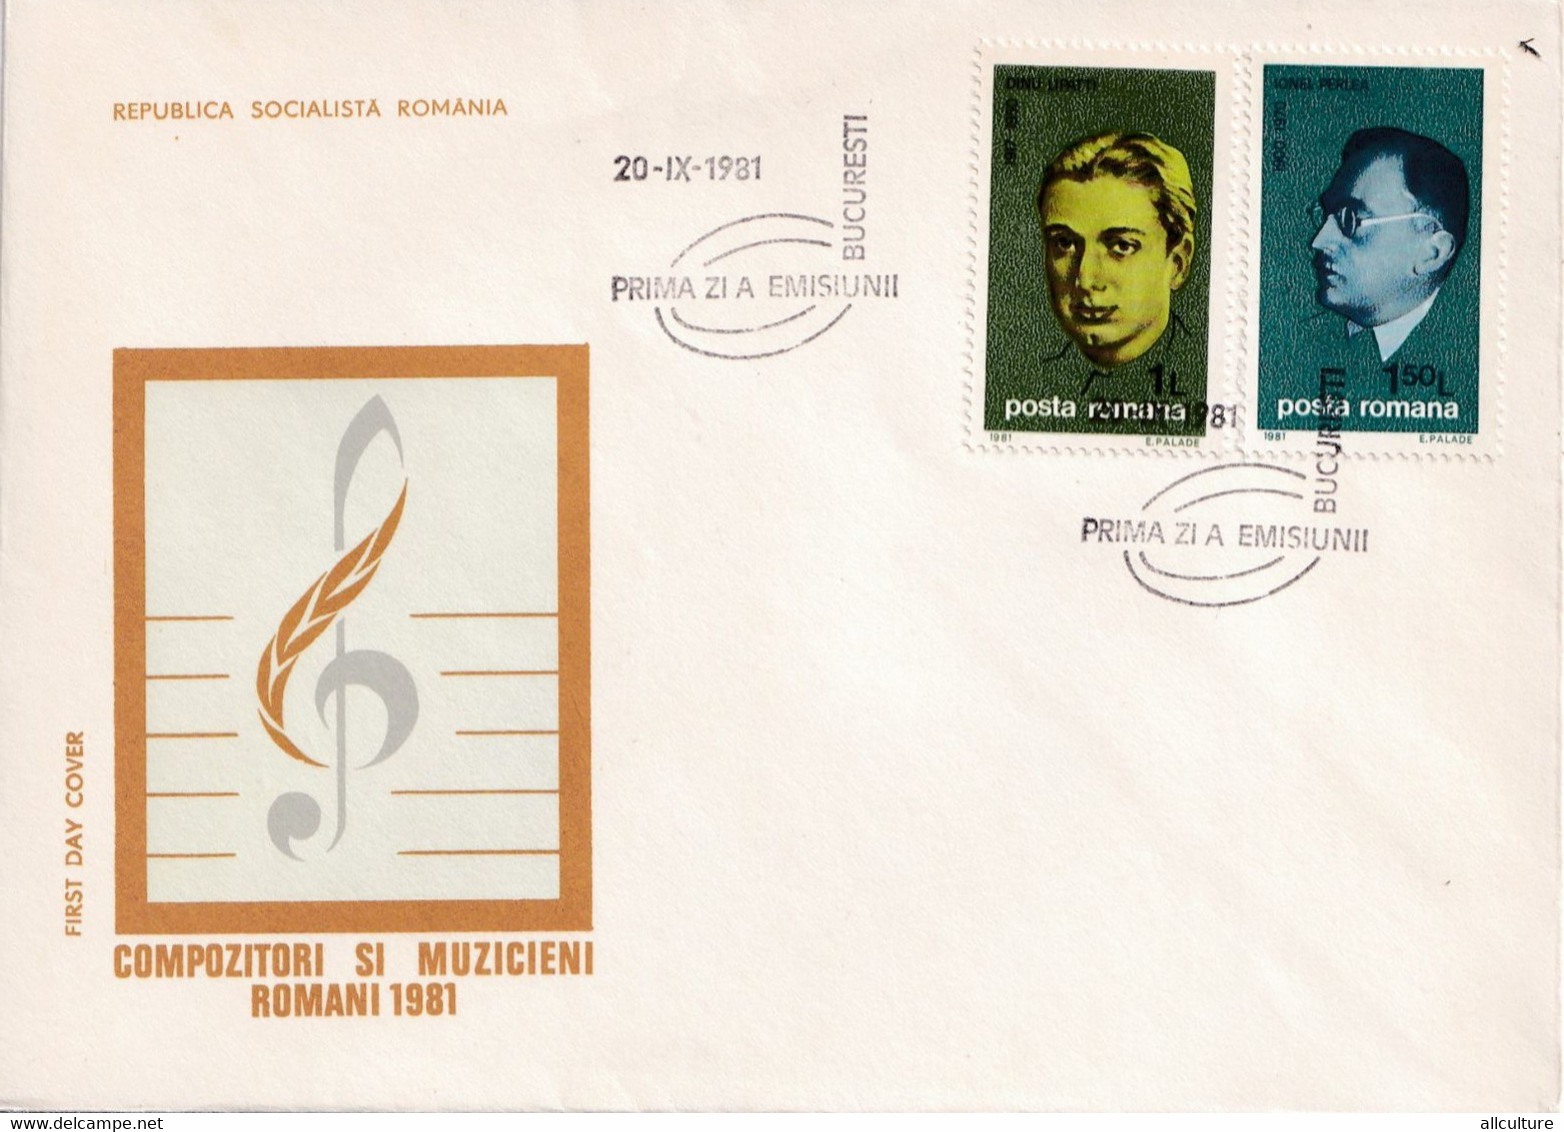 A2876 - Romanian Musicians And Composers, Bucuresti  1981, Socialist Republic Of Romania 3 Covers  FDC - Cantanti